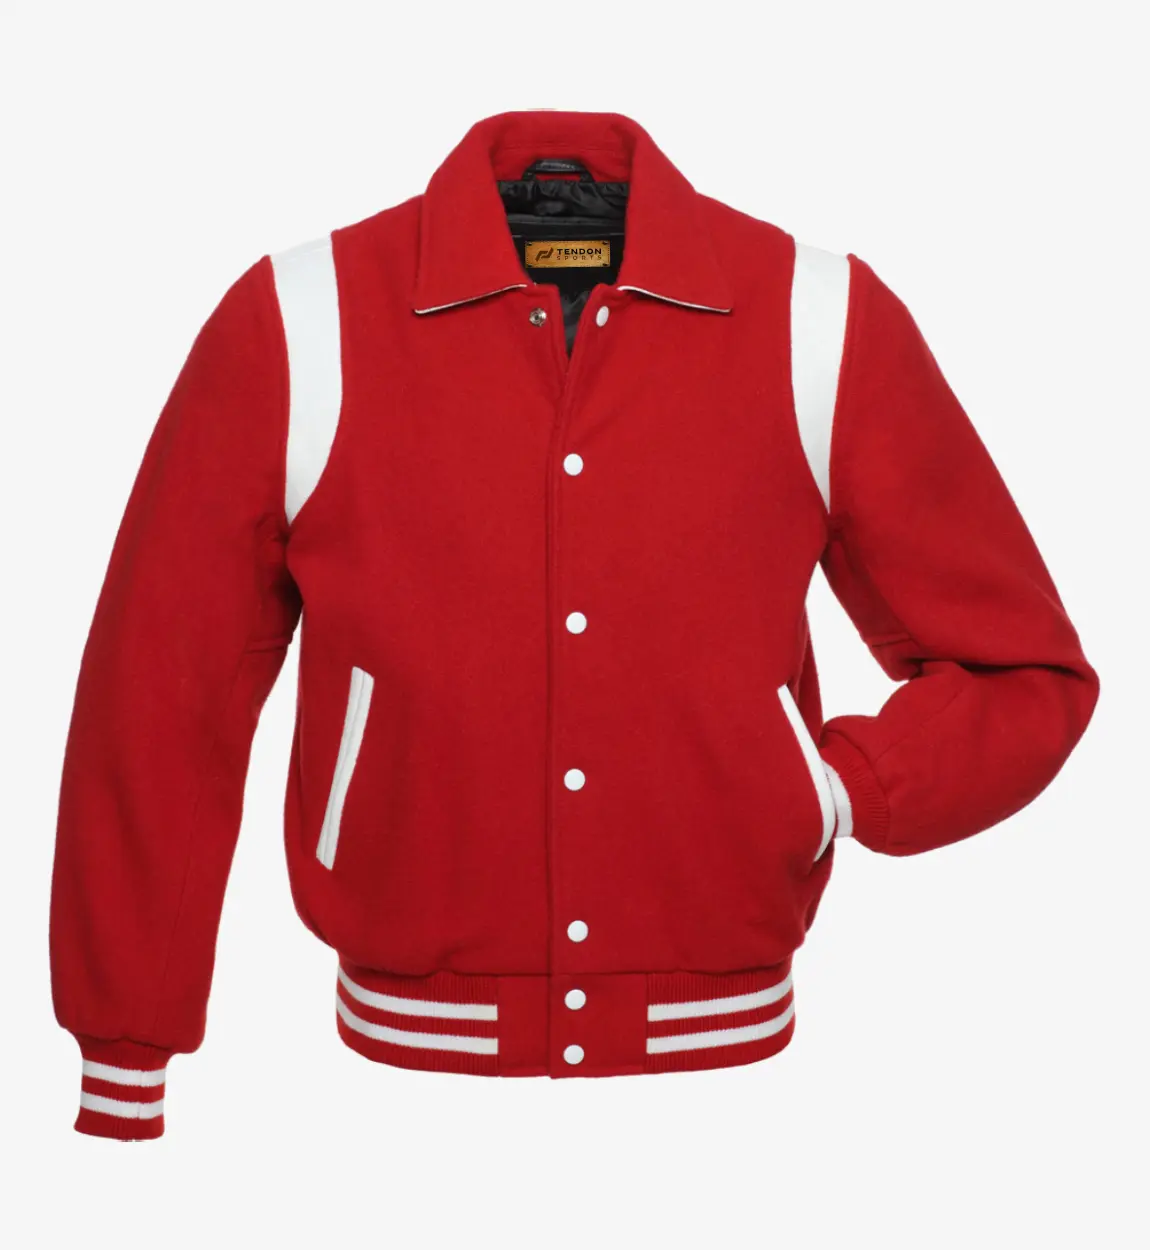 New Red Wool Varsity Jacket Tendon Sports